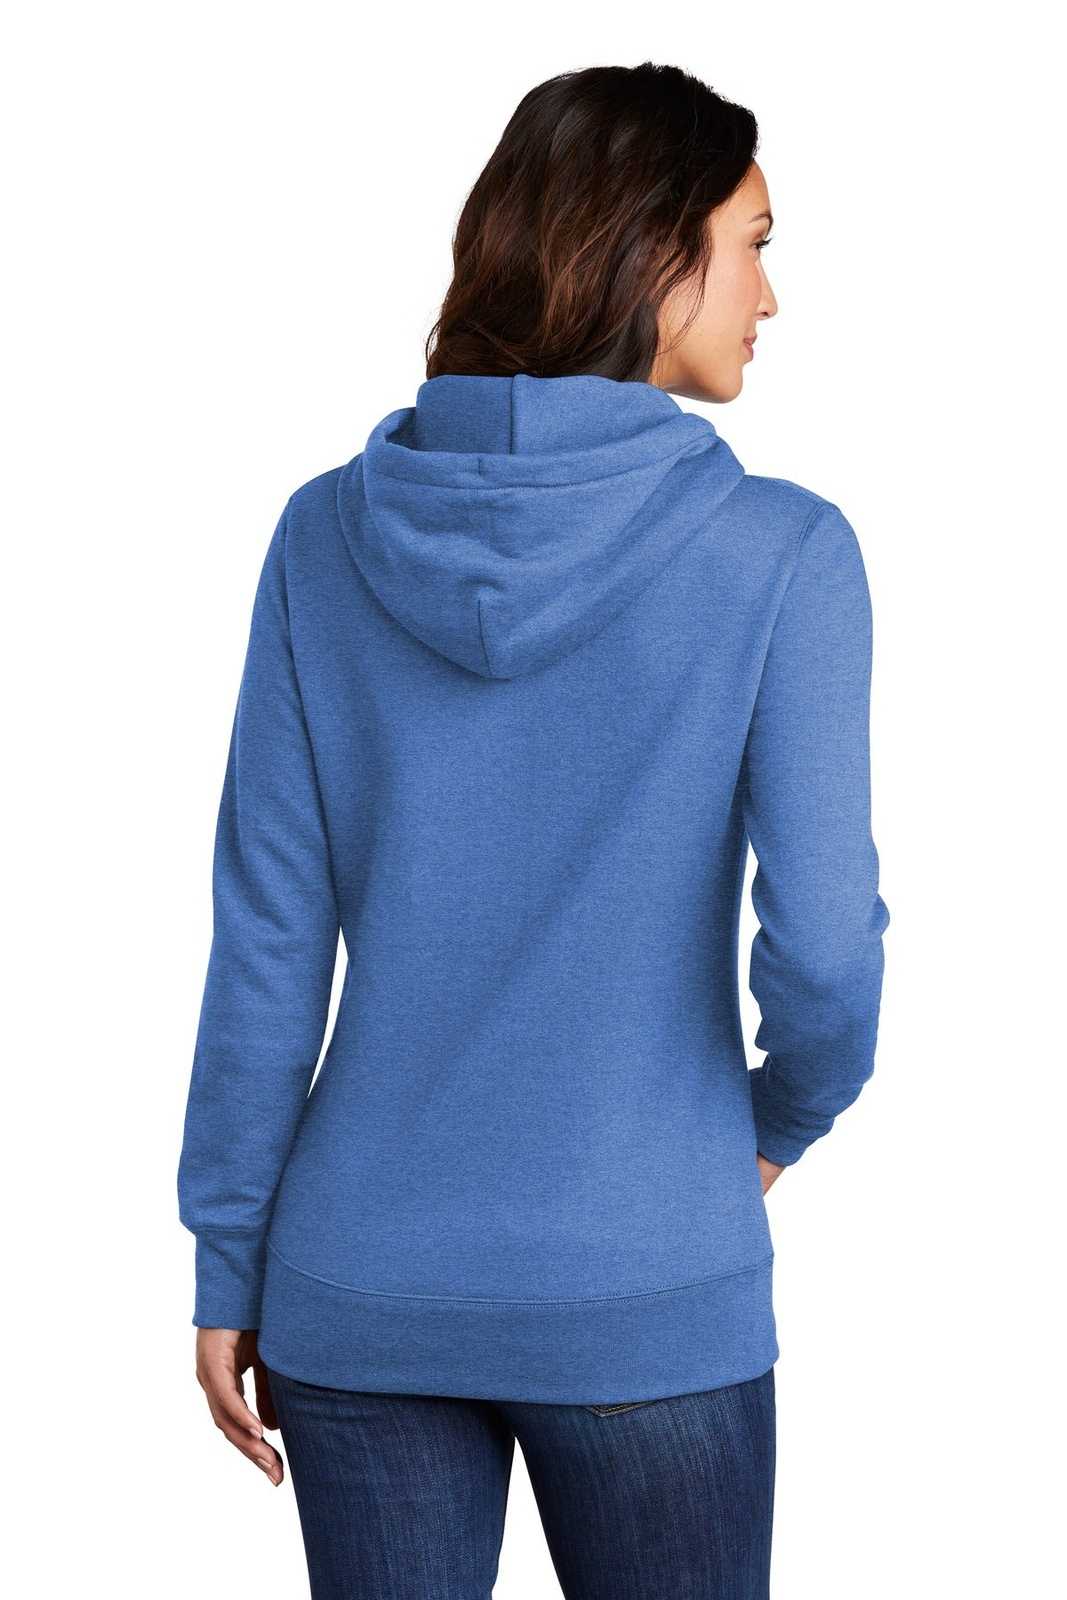 Port &amp; Company LPC78H Ladies Core Fleece Pullover Hooded Sweatshirt - Heather Royal - HIT a Double - 2